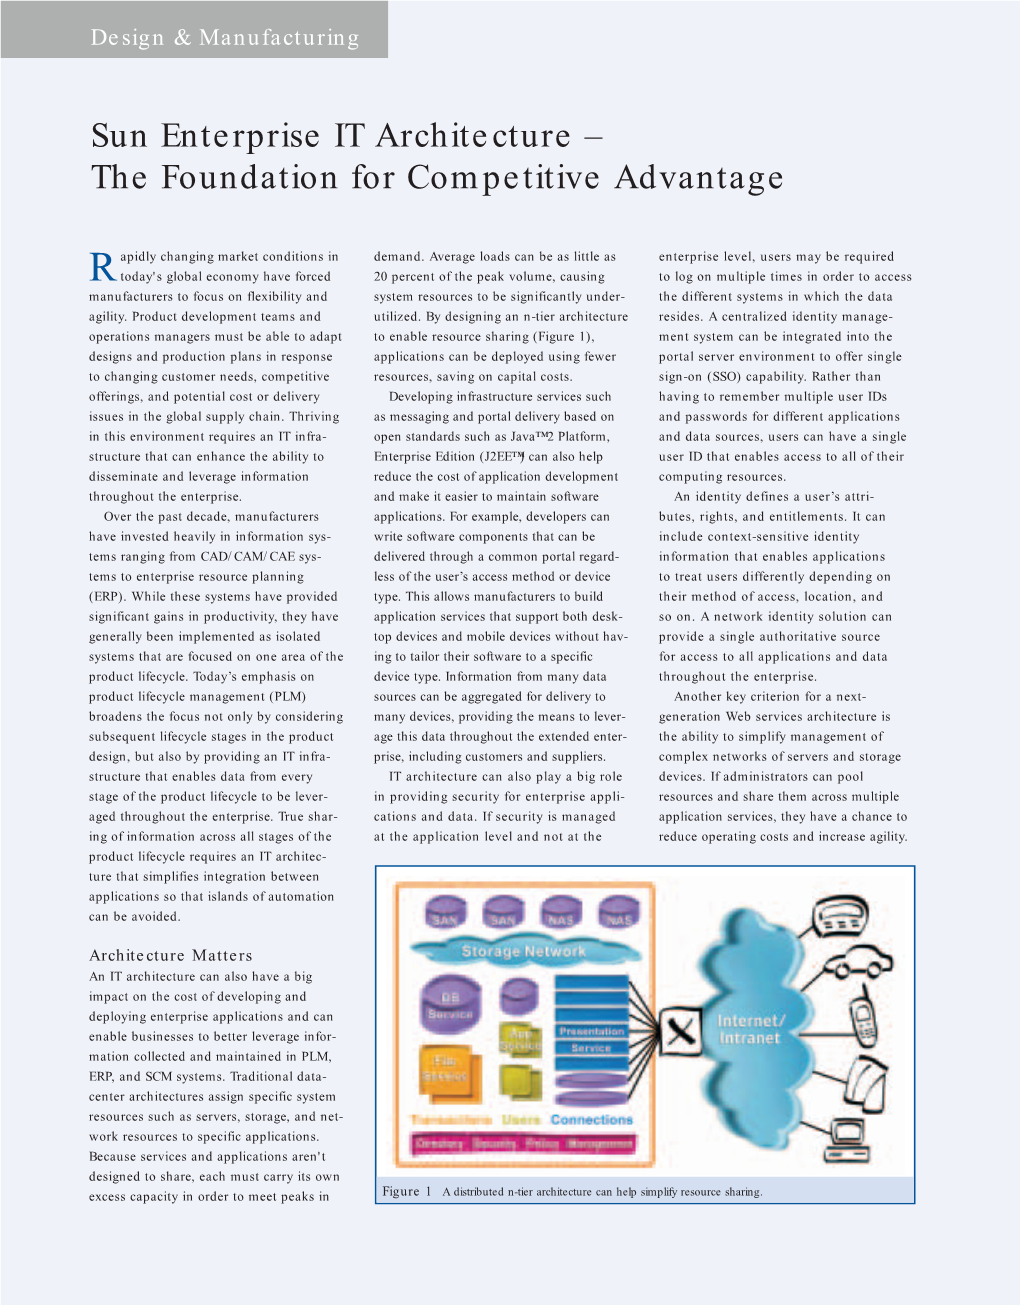 Sun Enterprise IT Architecture – the Foundation for Competitive Advantage